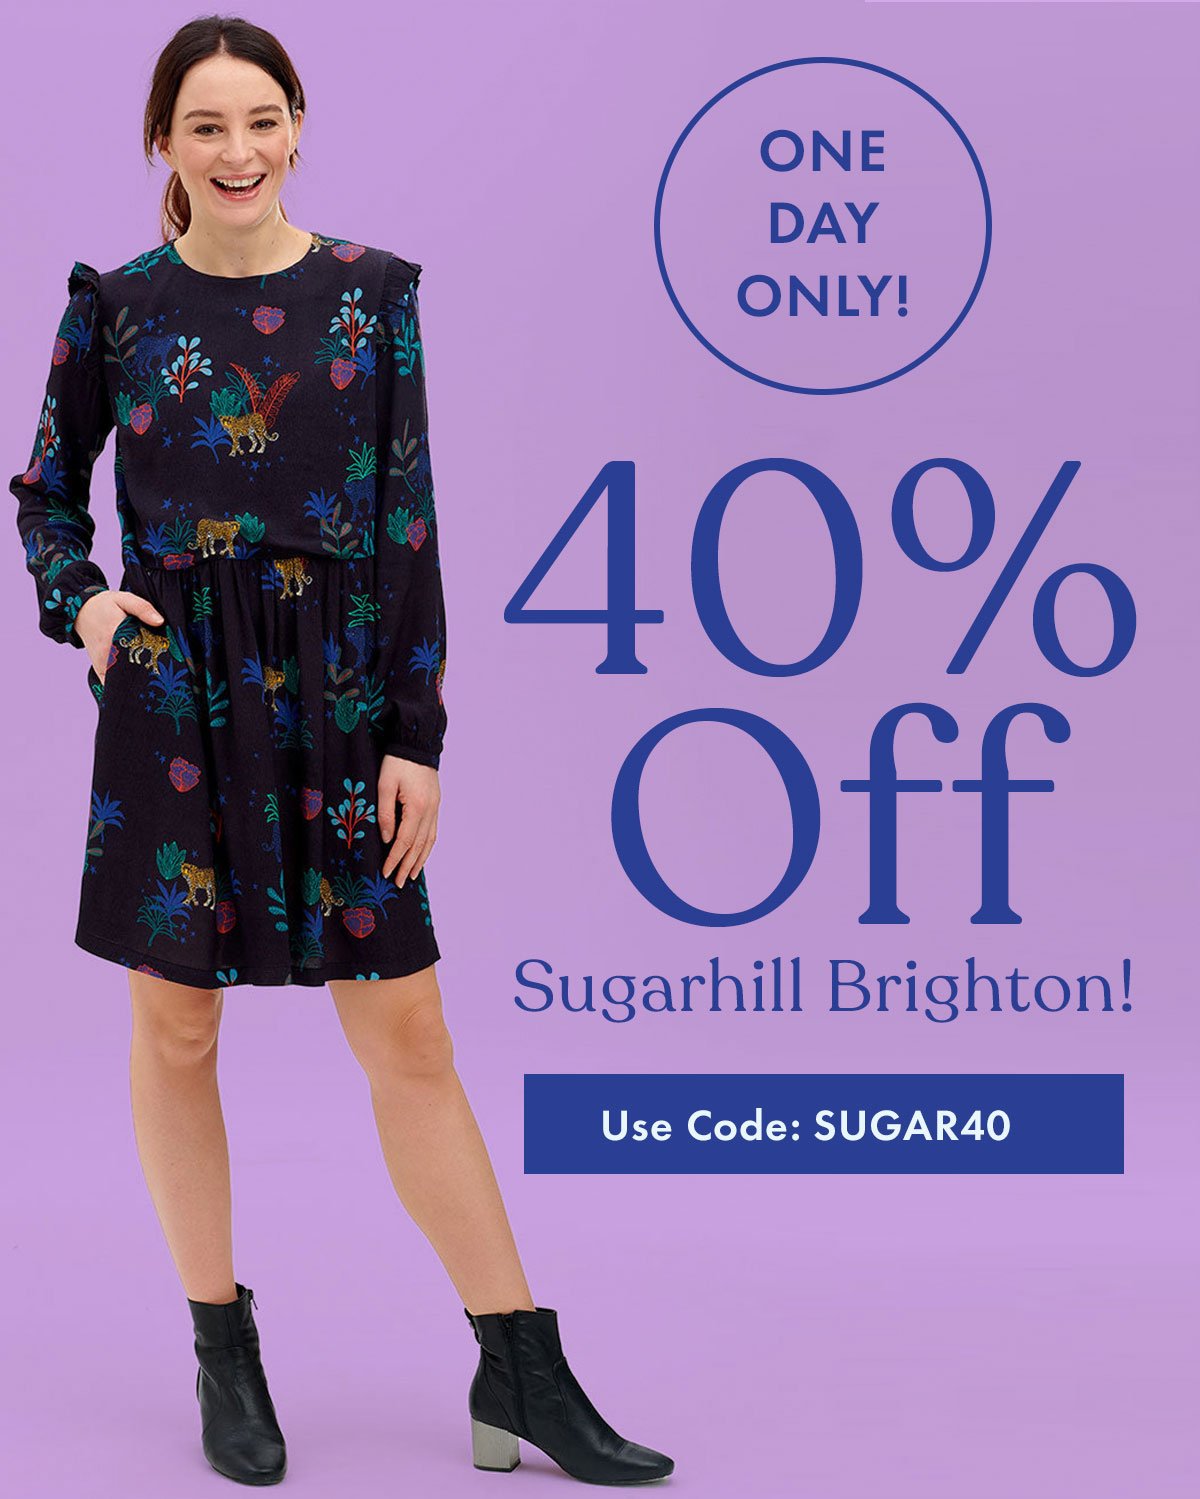 One Day Only! | 40% Off Sugarhill Brighton!